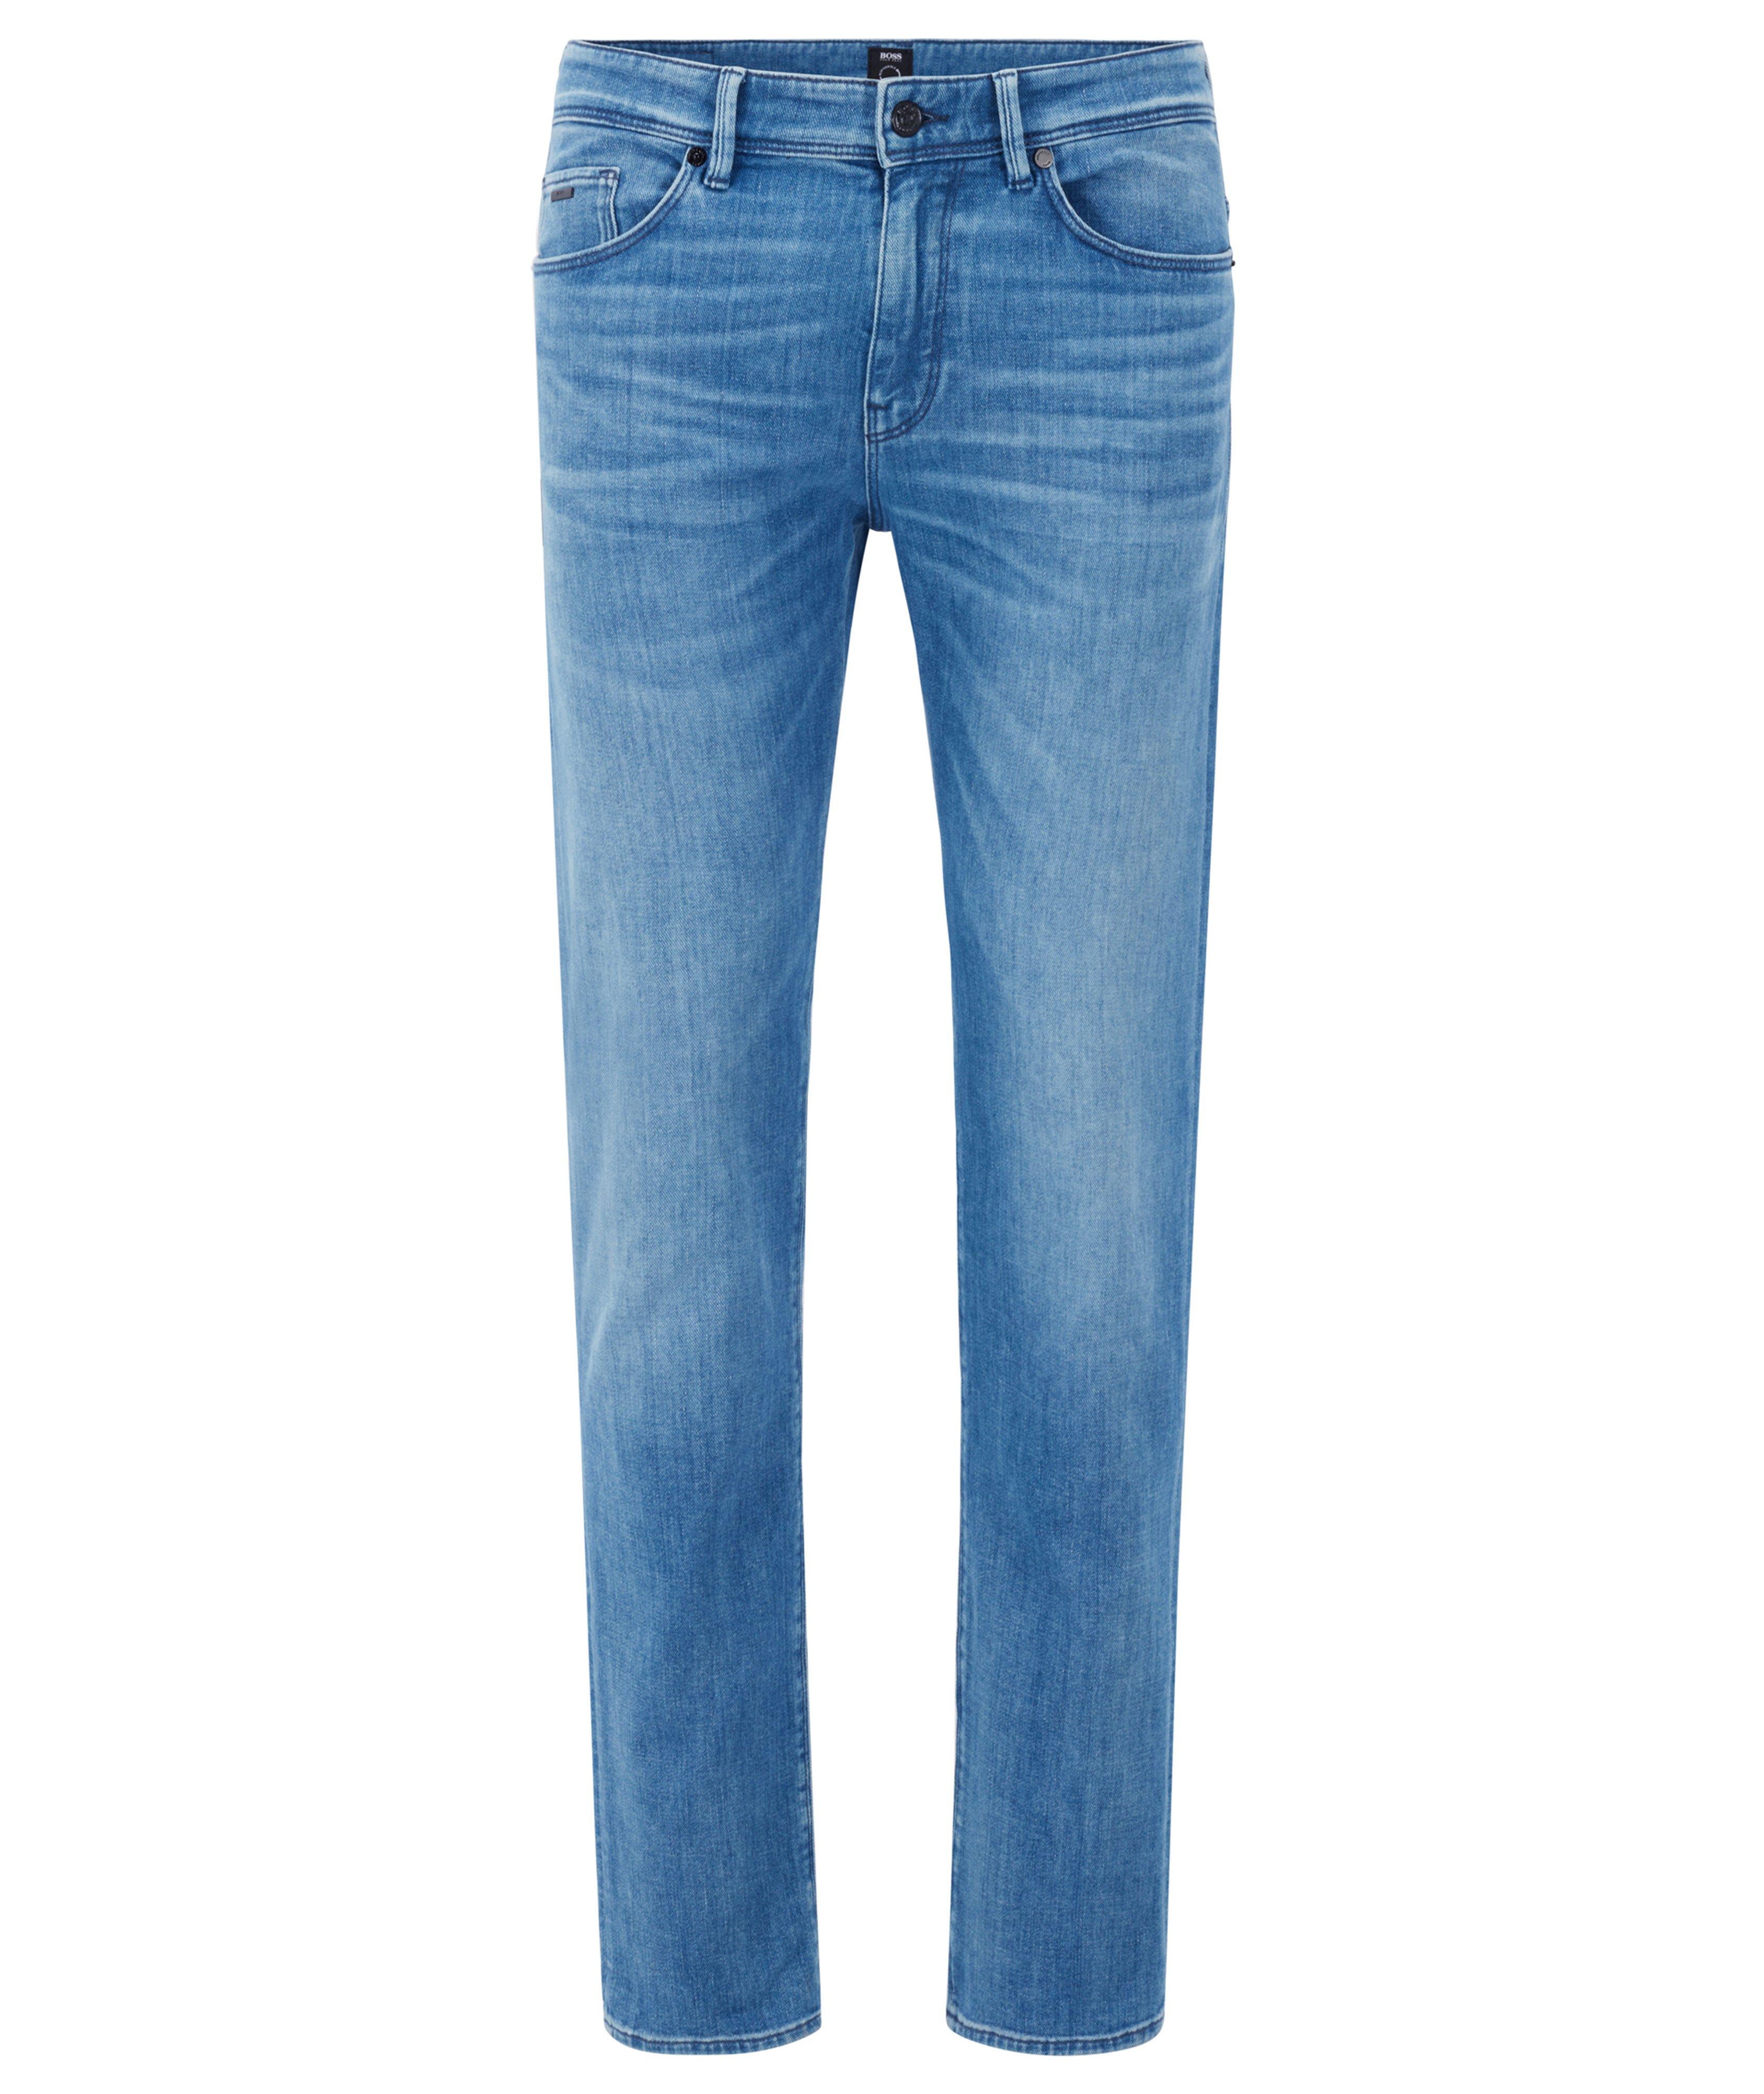 Delaware Slim-Fit Stretch Jeans image 0